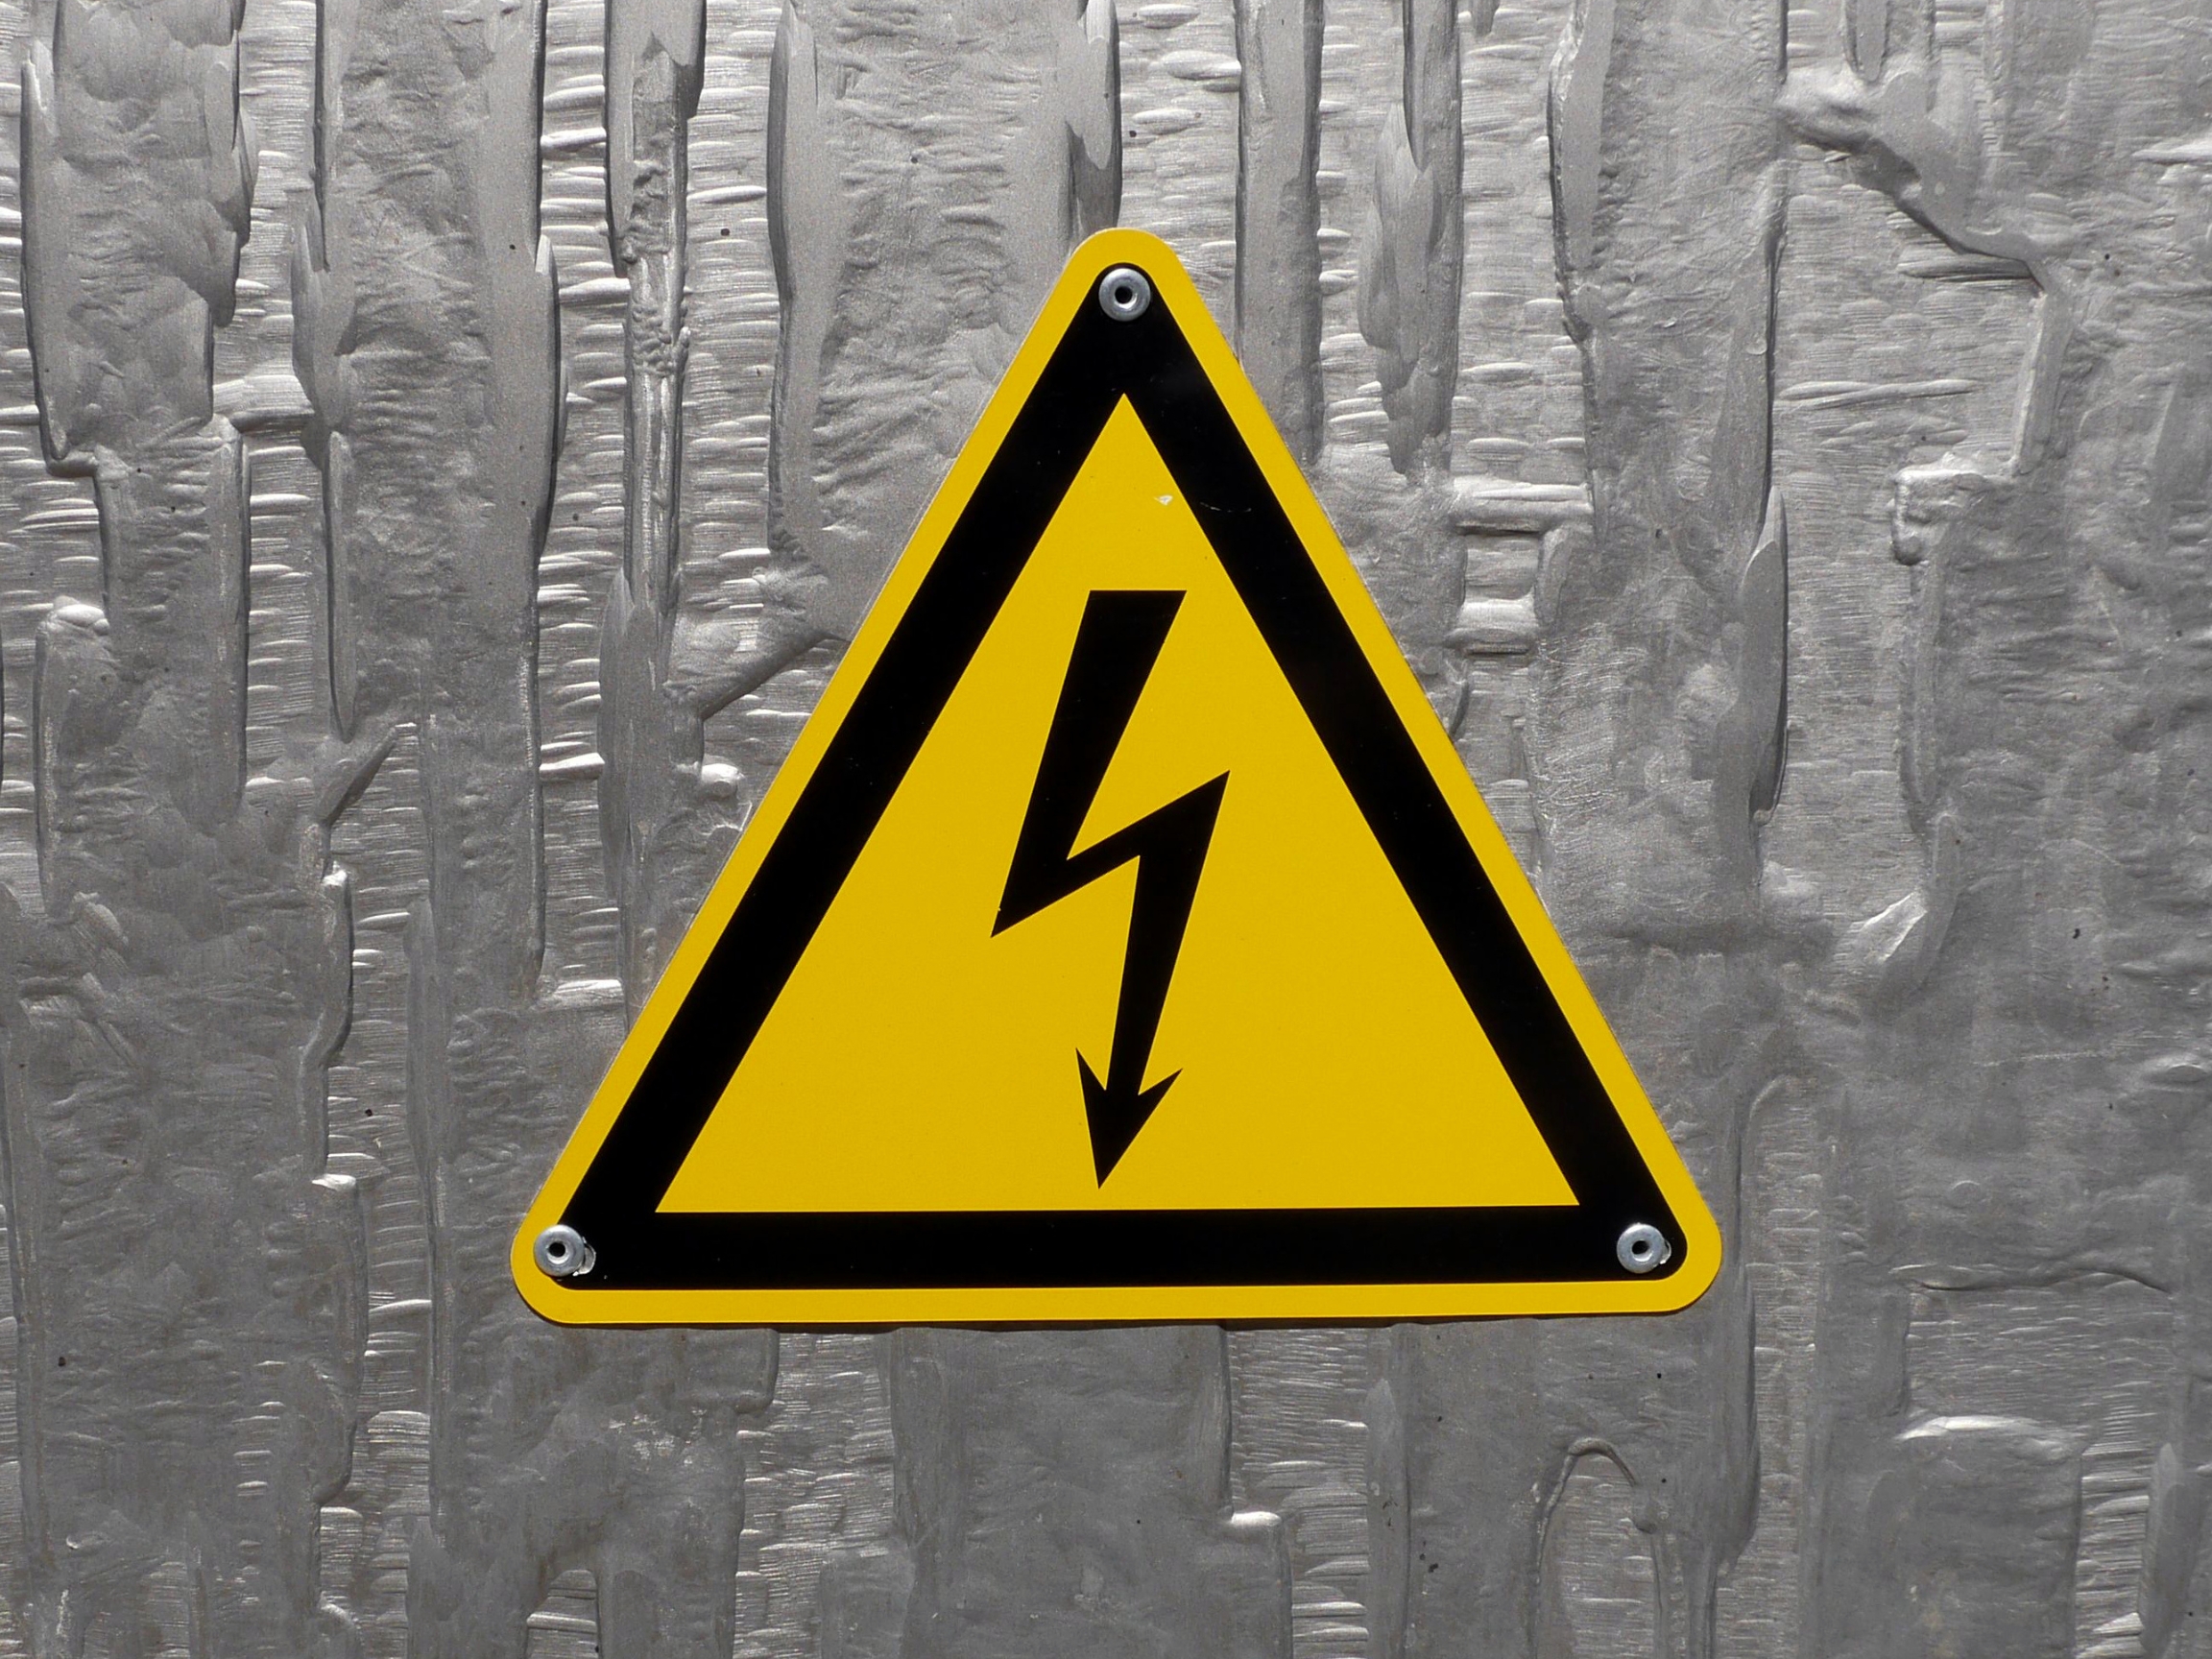 Header image displays voltage warning sign on a metal wall